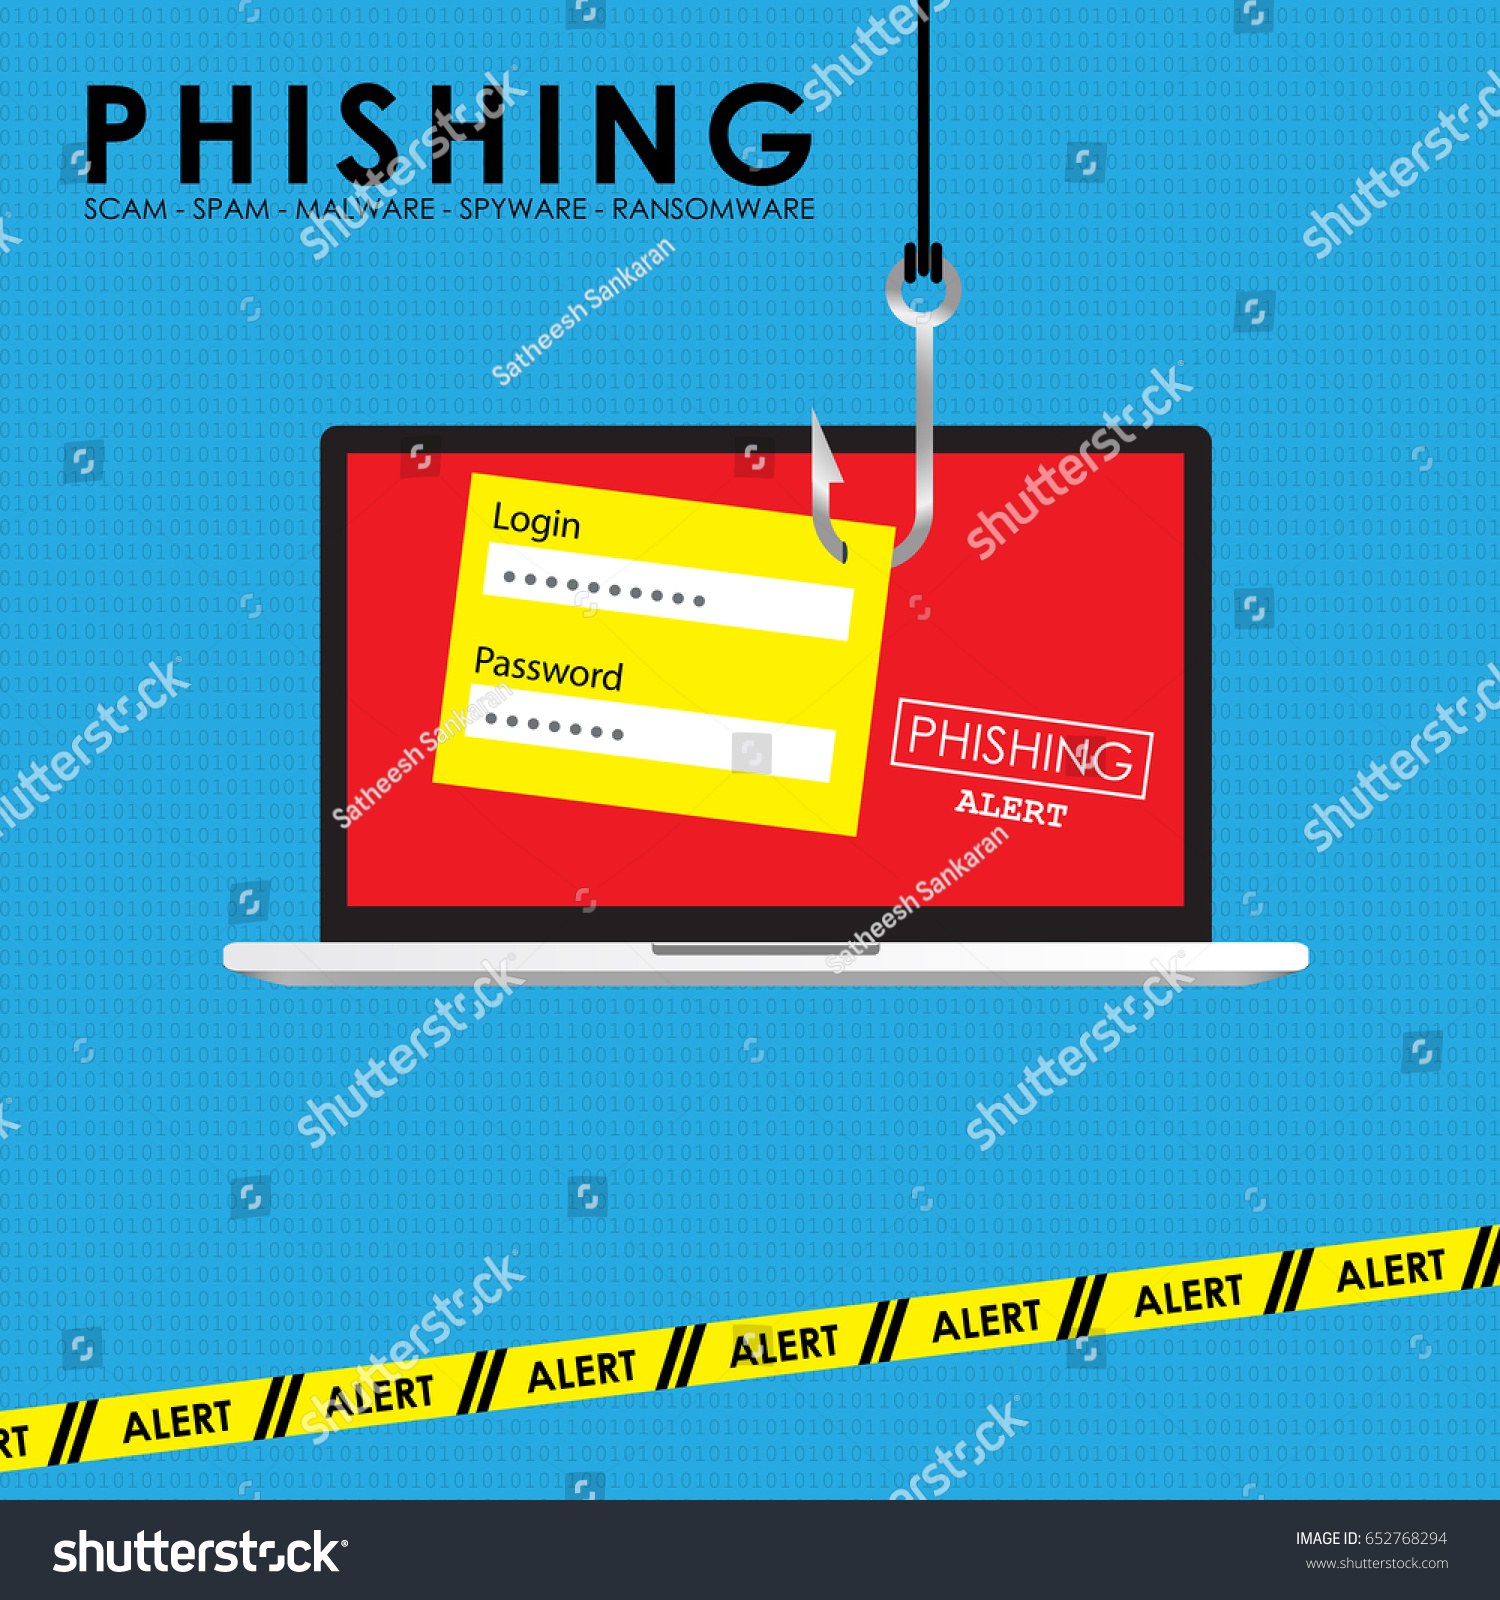 Phishing Alert Vector Illustration Cyber Scam Stock Vector Royalty Free 652768294 